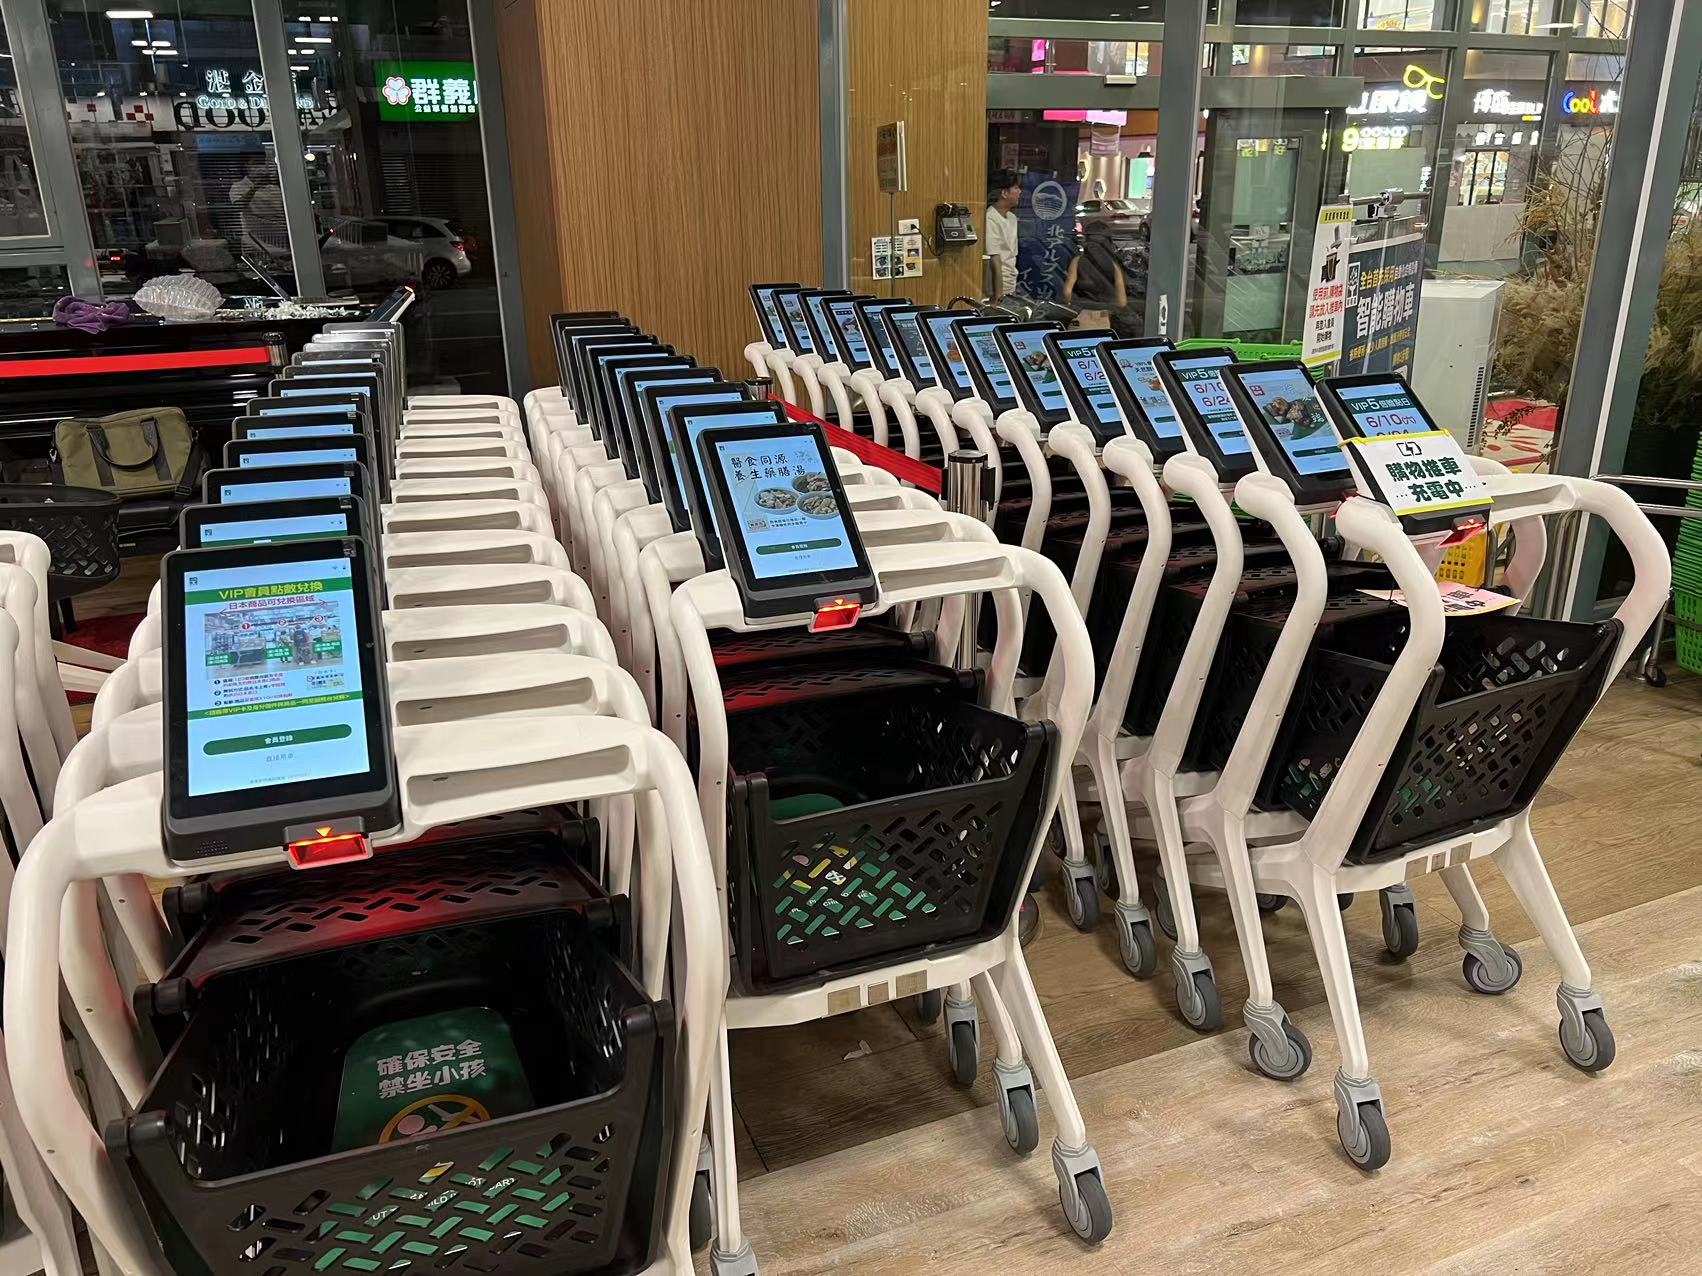 self-checkout shopping carts